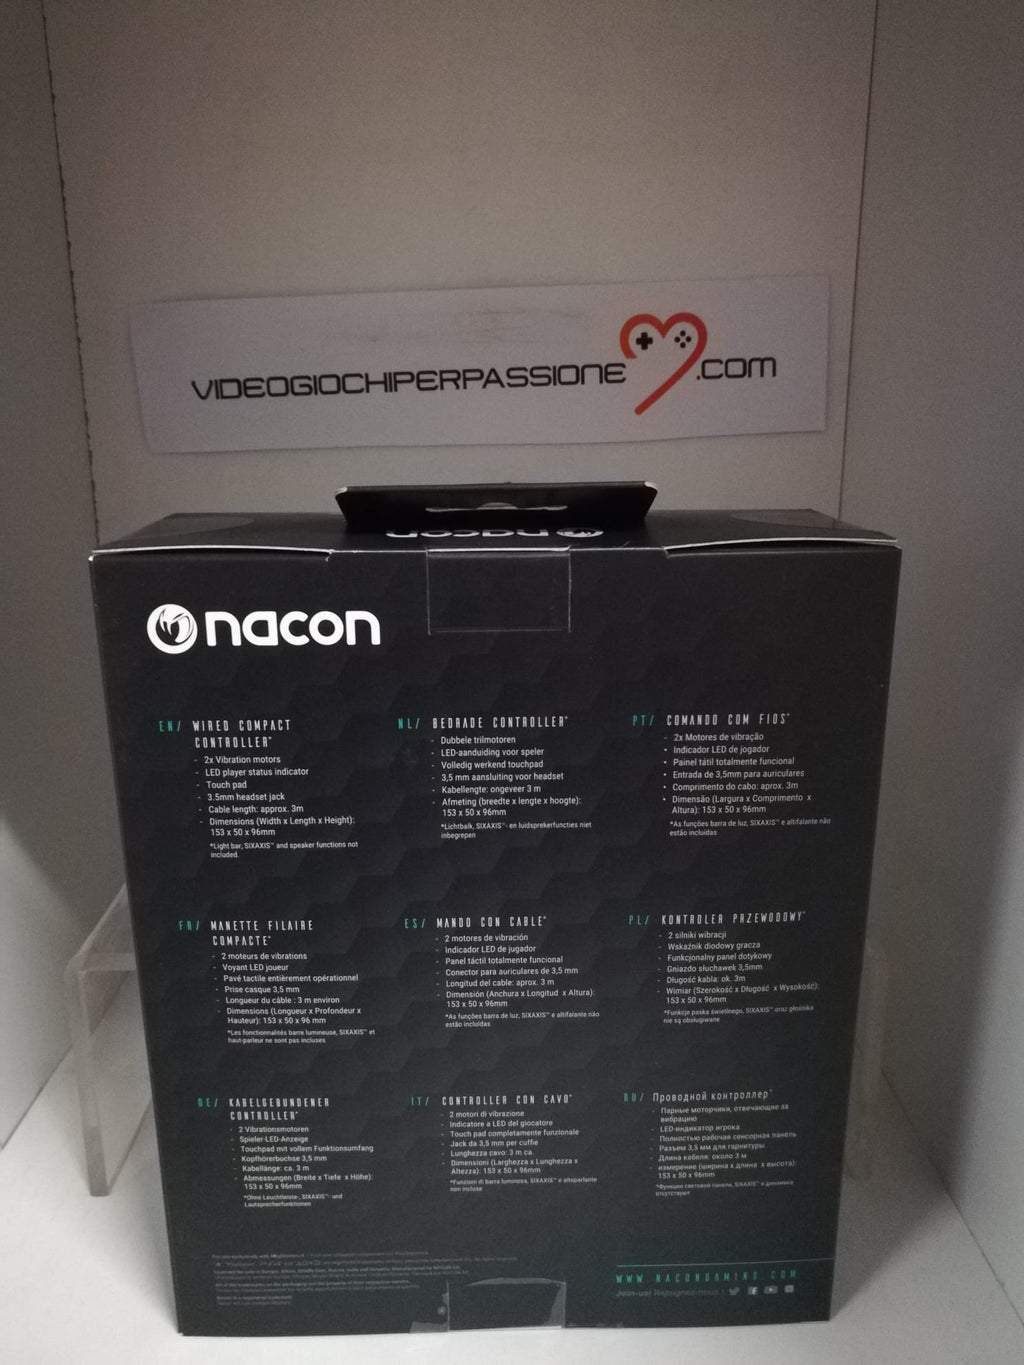 Controller Playstation 4 Nacon Compact Ufficiale Sony Playstation Videogiochi Per Passione